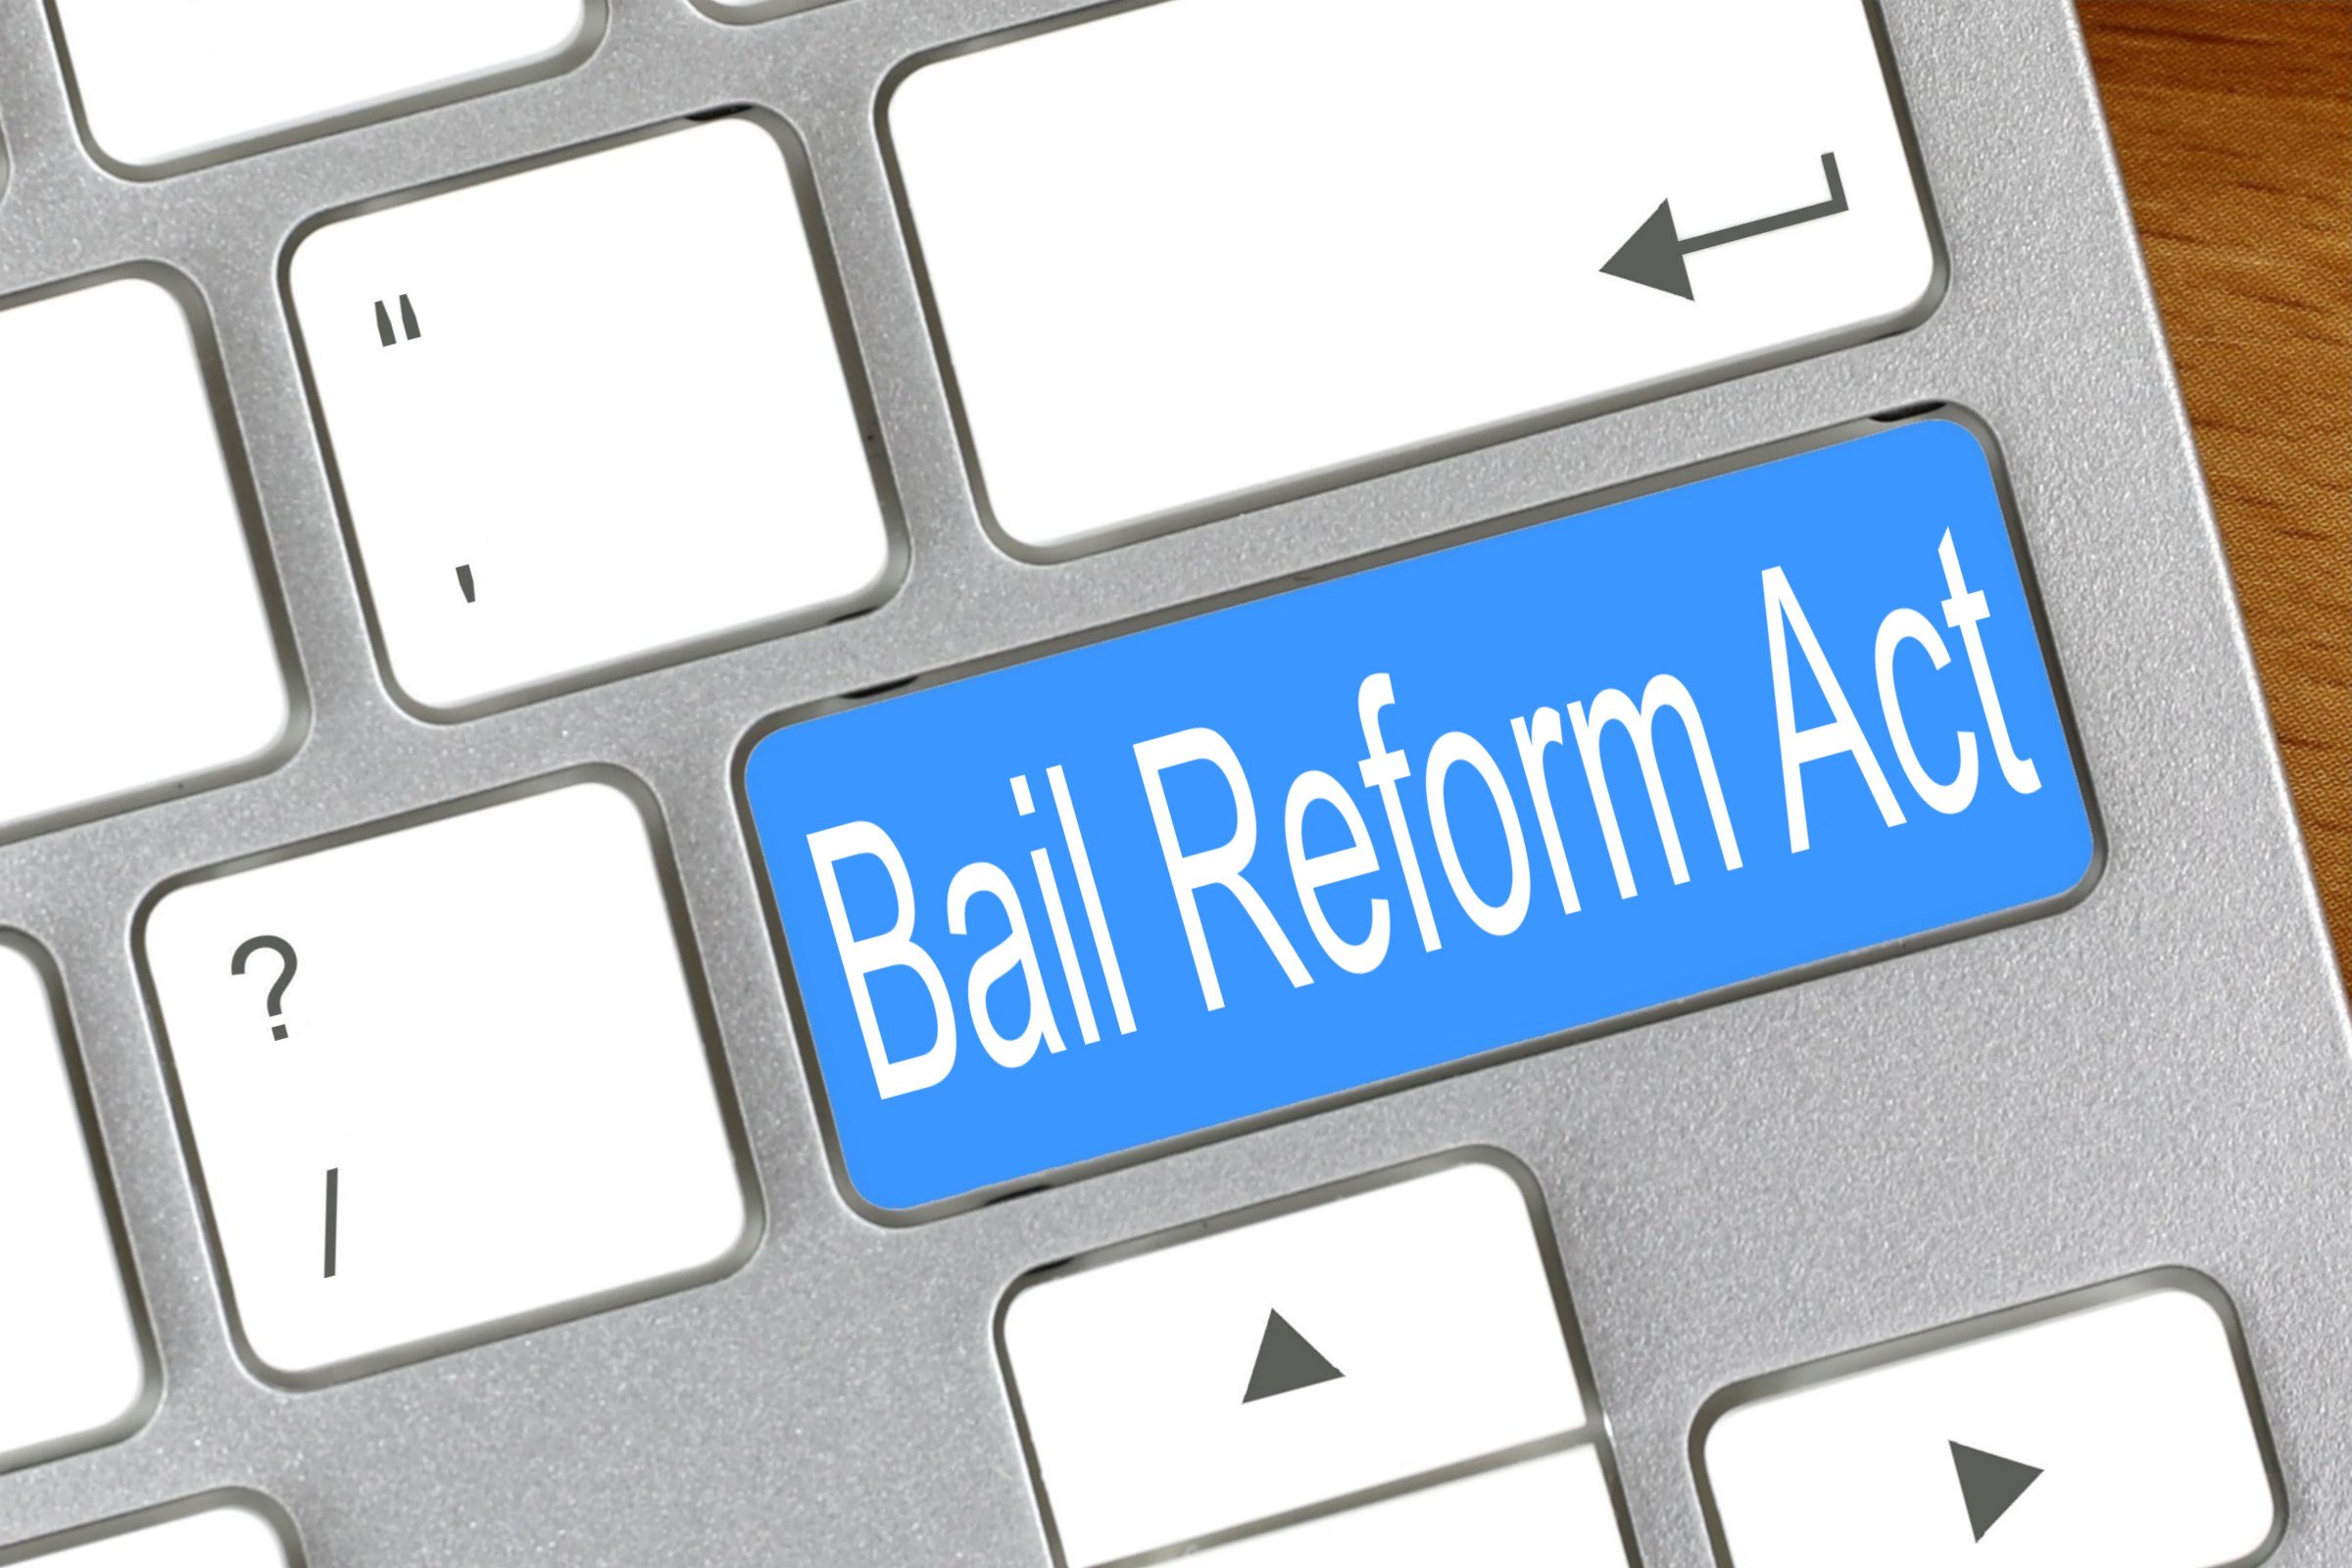 bail reform act